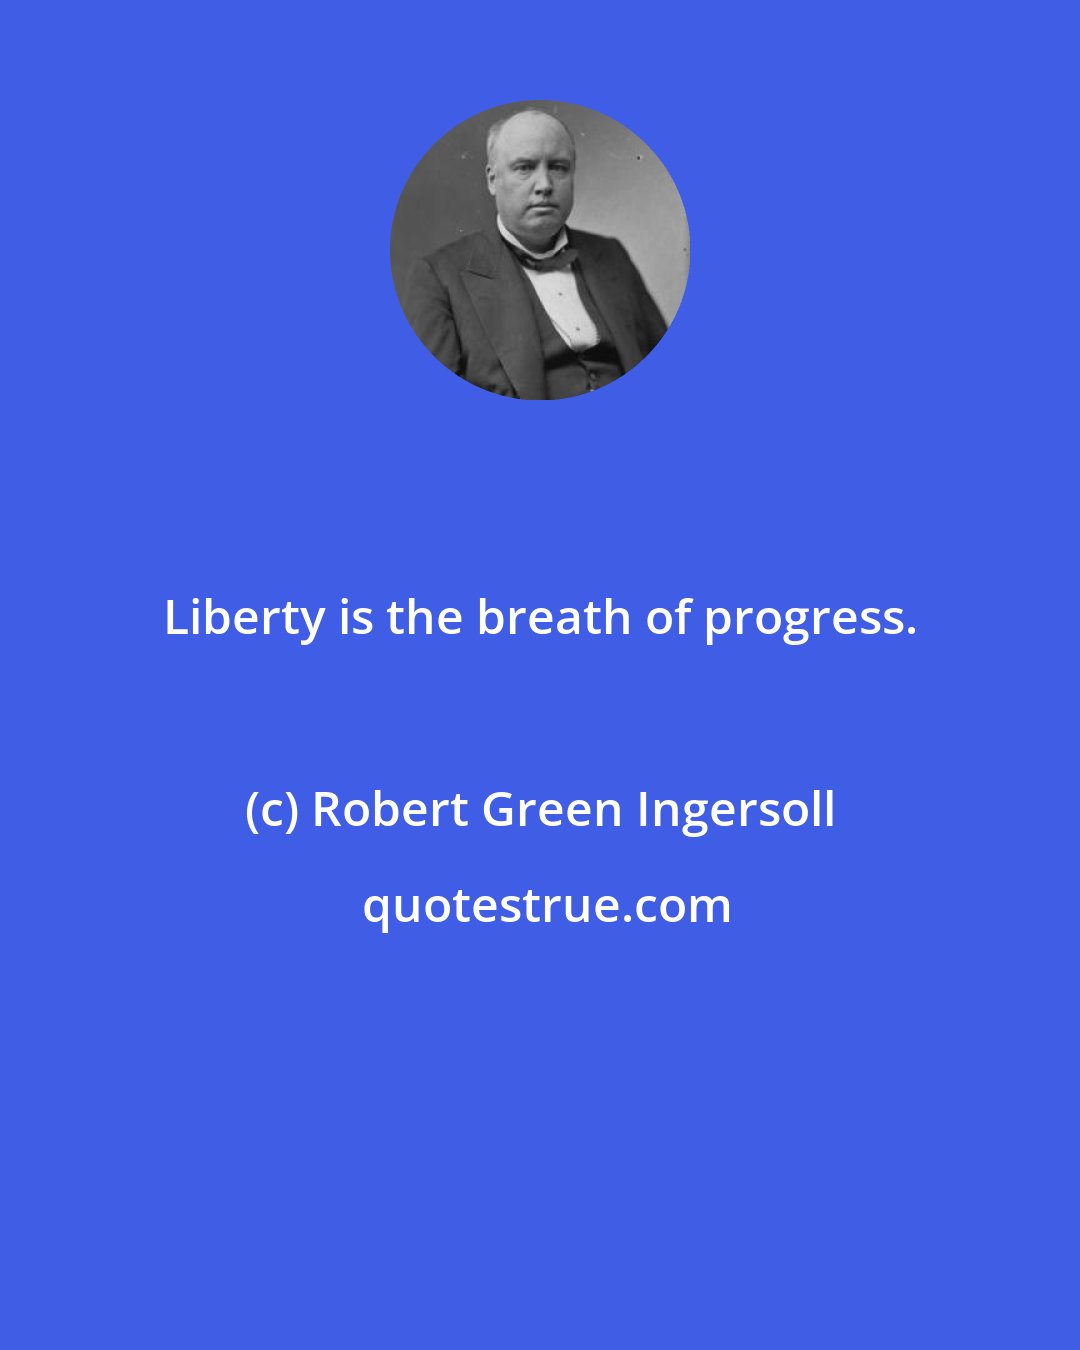 Robert Green Ingersoll: Liberty is the breath of progress.